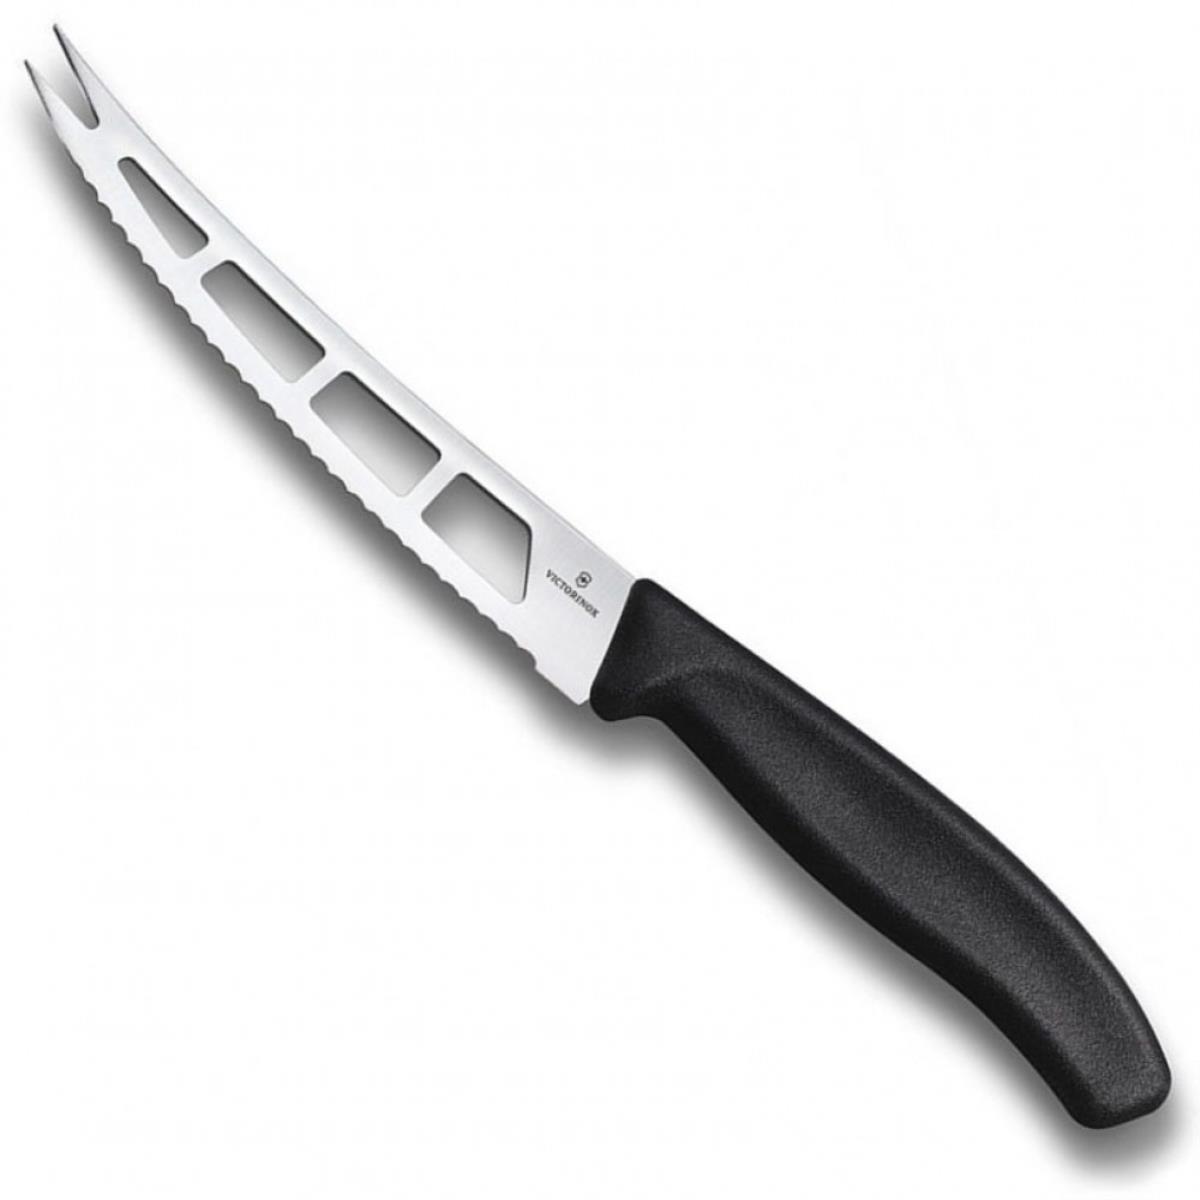 Нож для сыра и масла 6.7863.13 VICTORINOX нож 0 6223 942 нож брелок victorinox